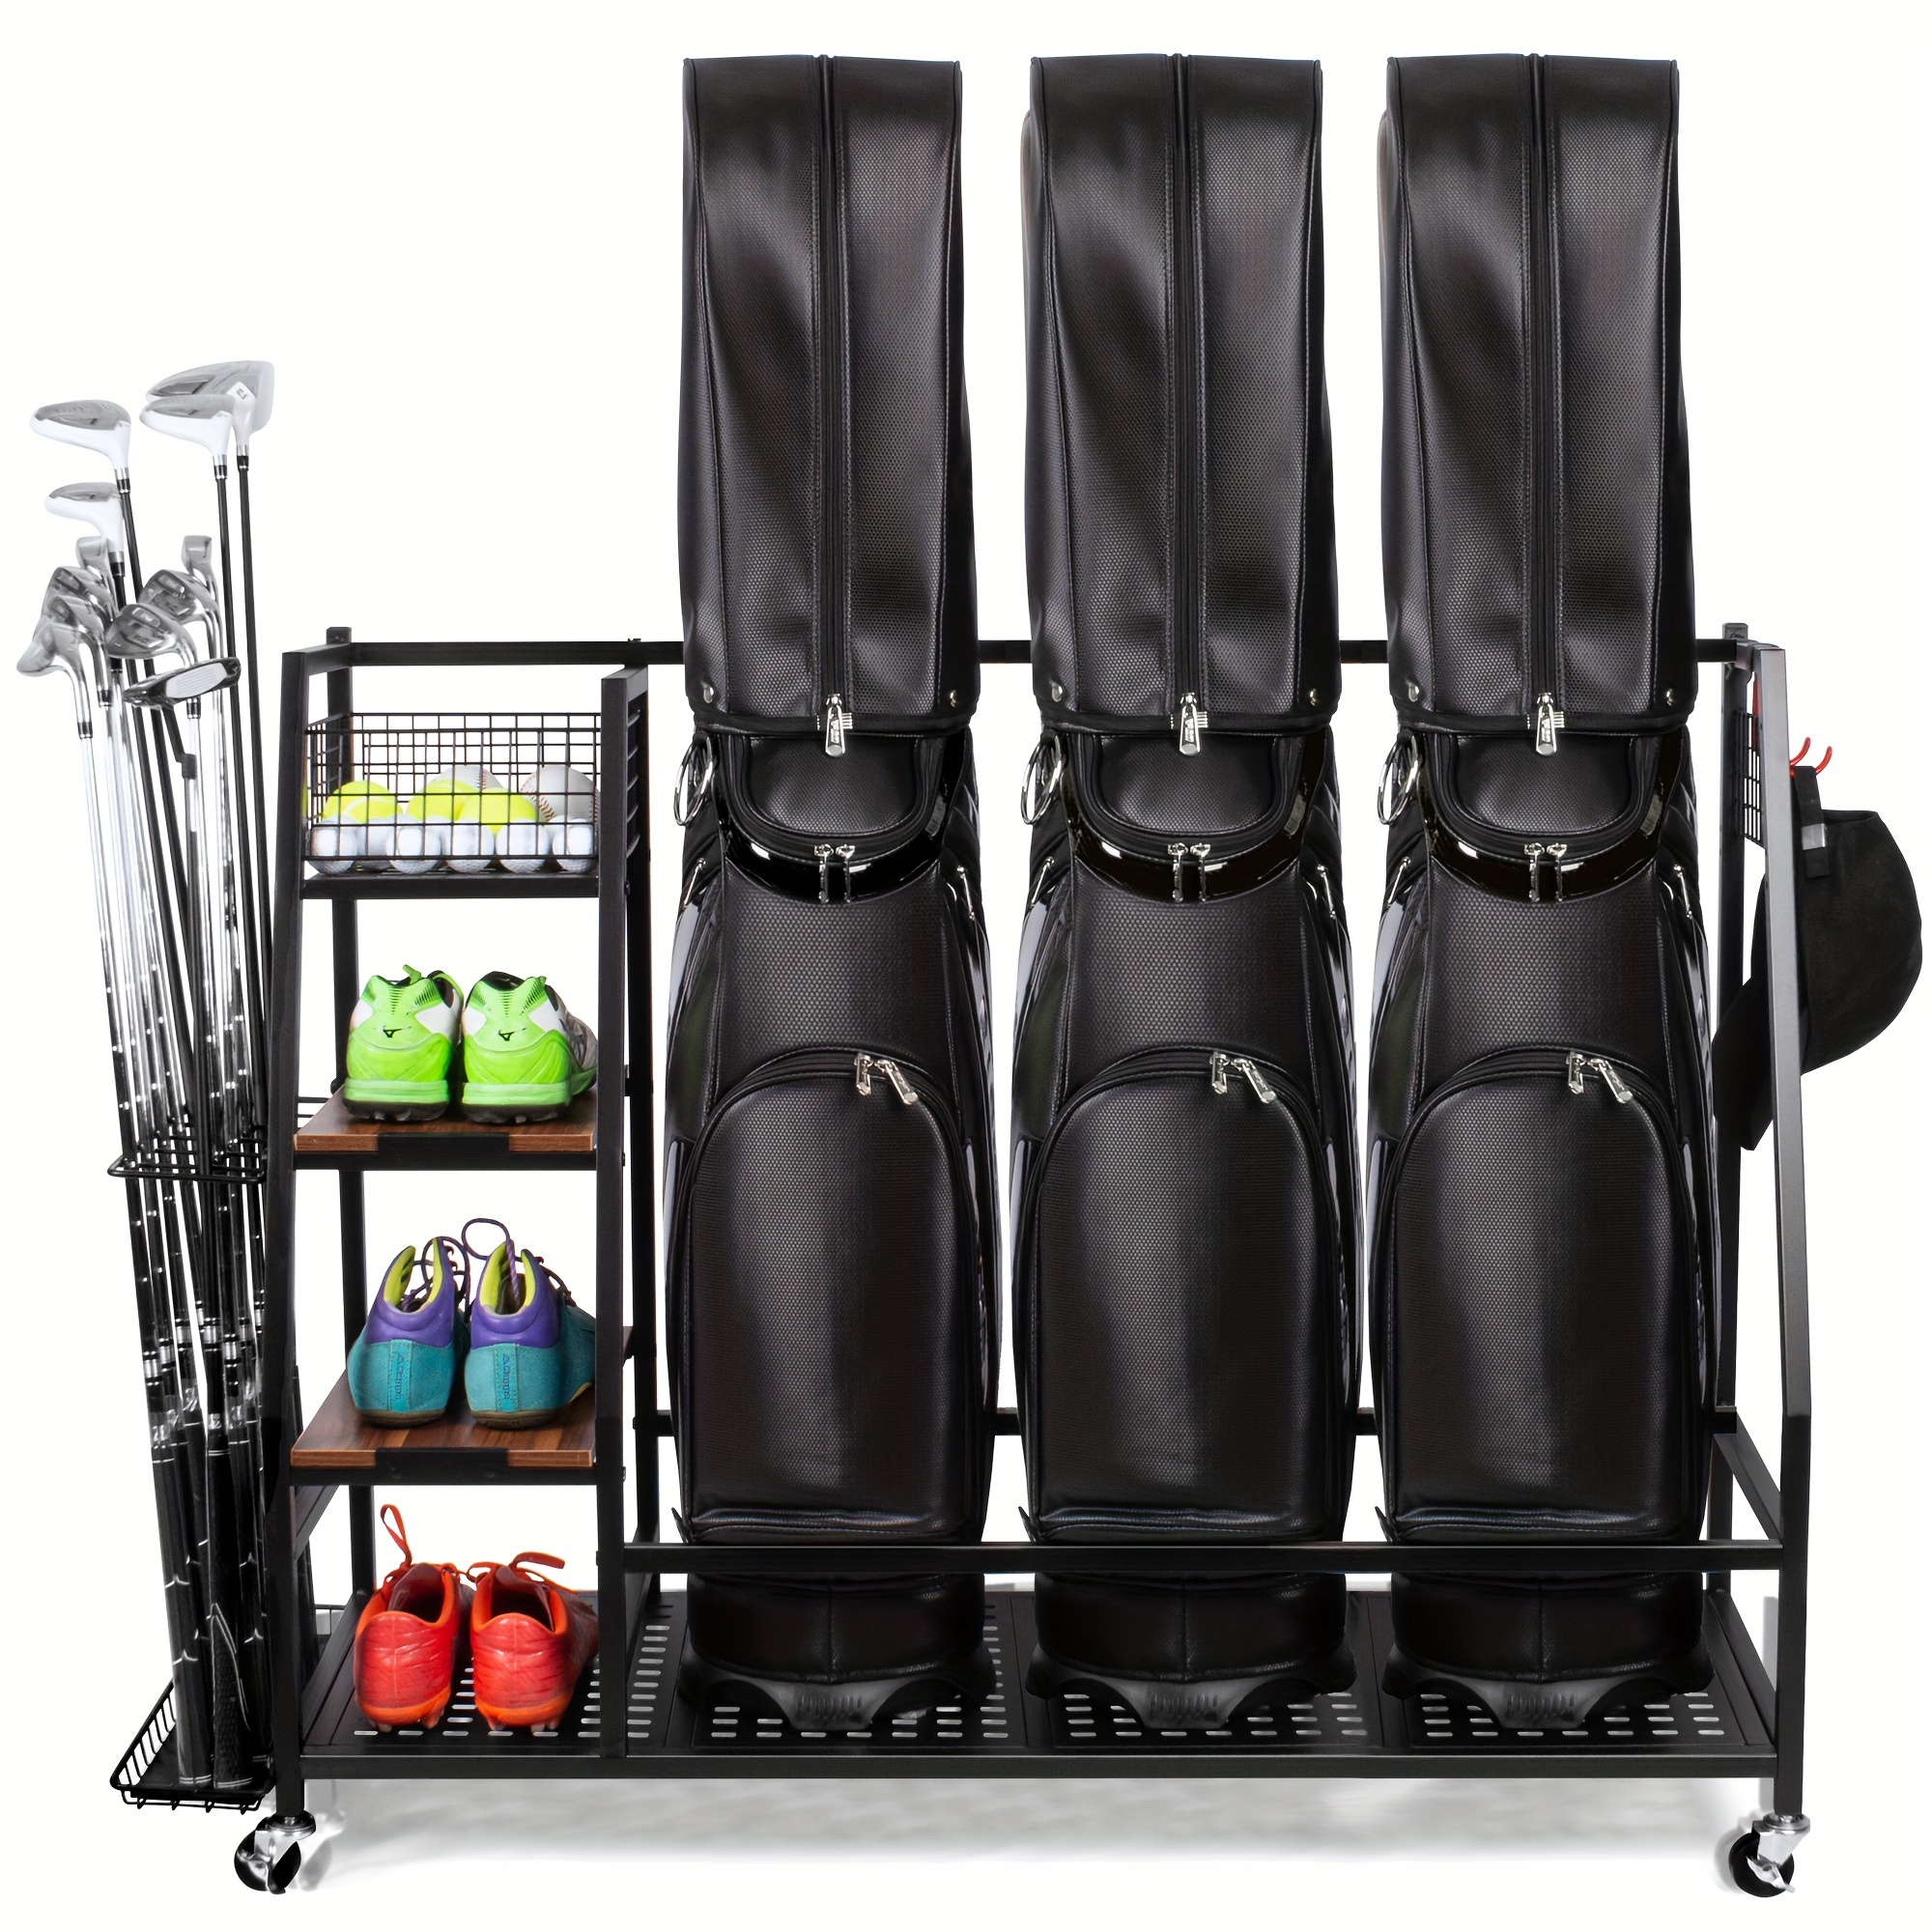 Golf Bag Storage Garage Organizer, Golf Storage Stand and Golfing Equipment  Rack, Golf Garage Organizer Shelves, Extra Large for Golf Clubs